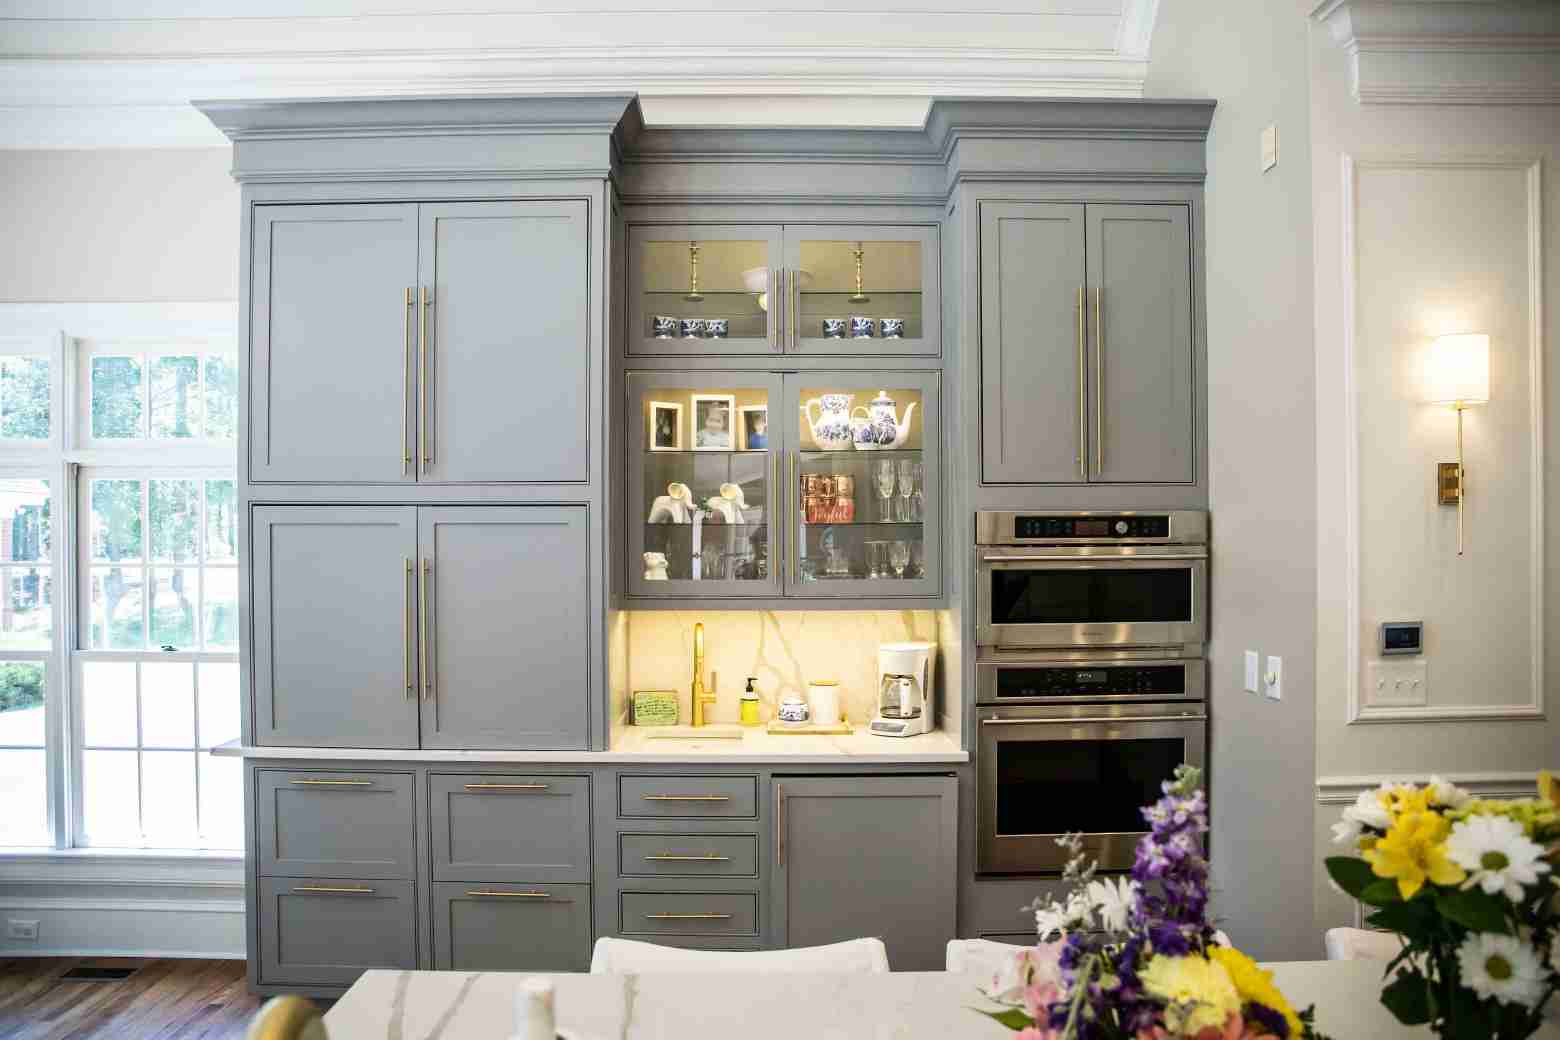 Custom designed kitchen cabinets